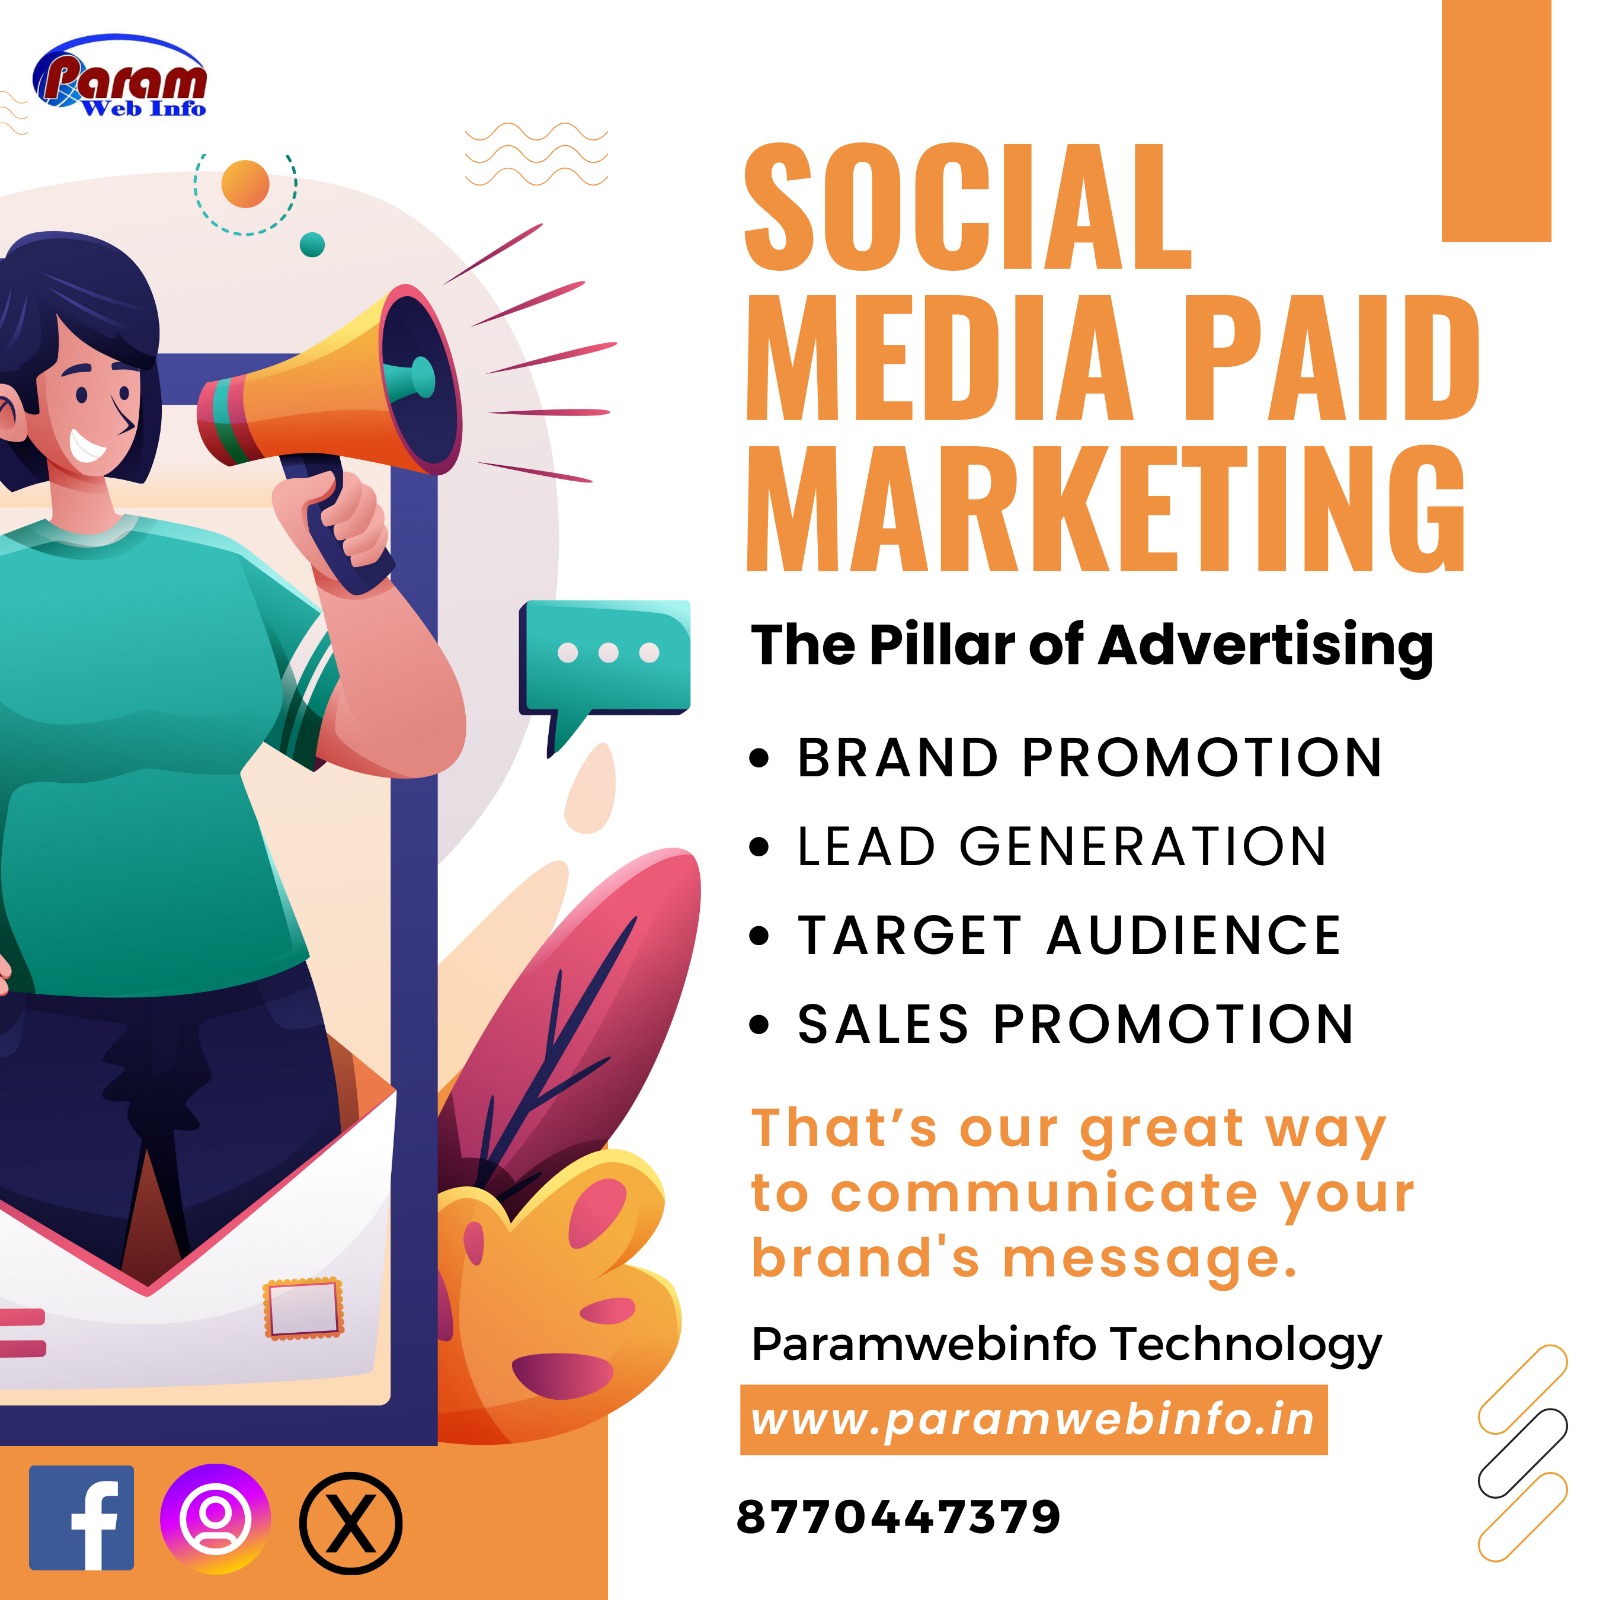 Social media marketing basic advantage for business promotions.